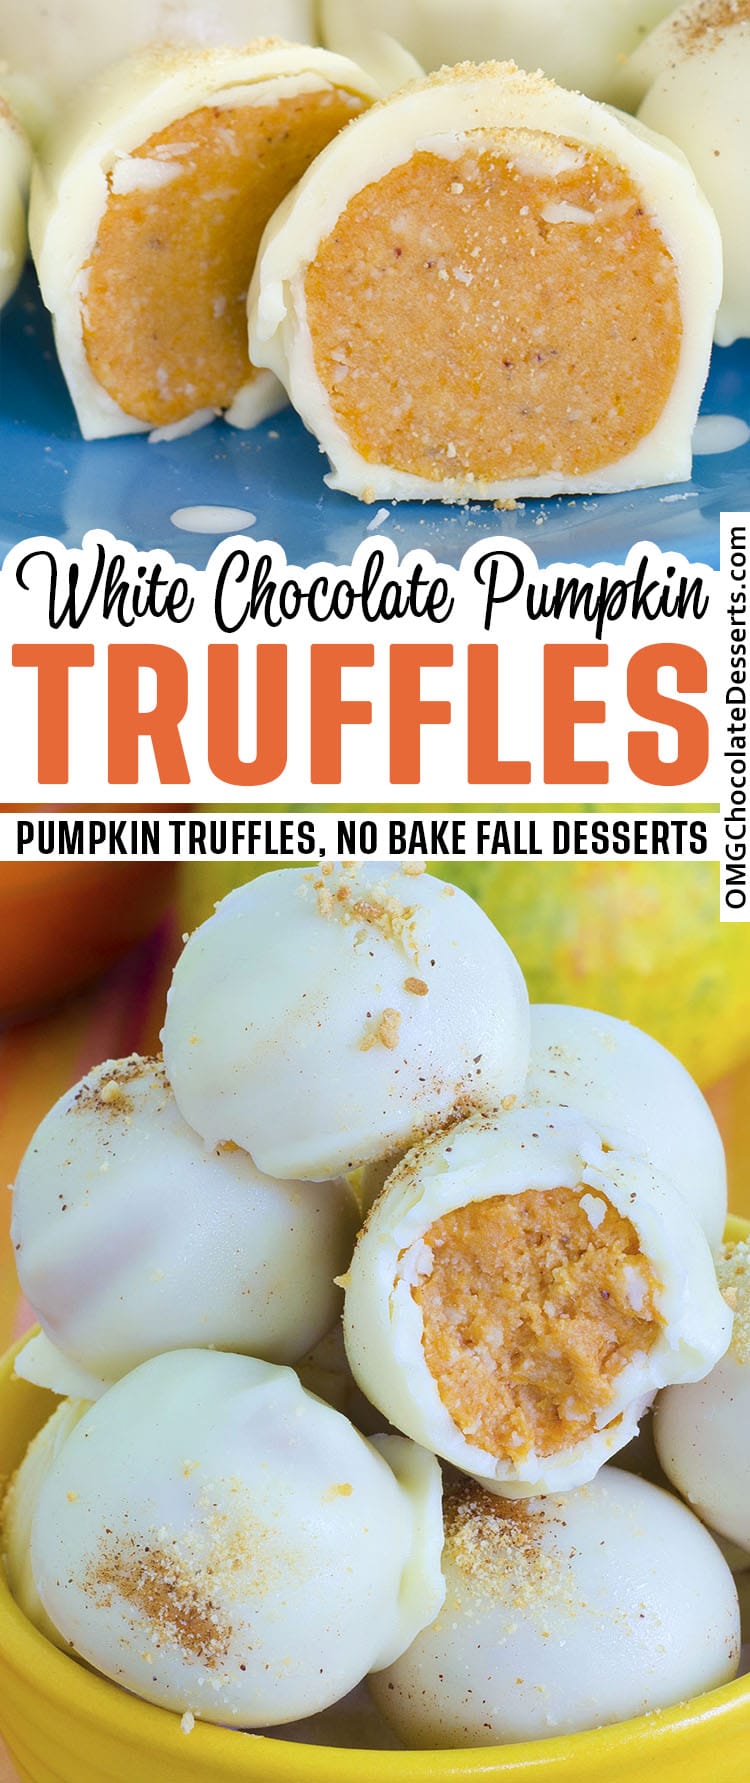 Pumpkin Truffles